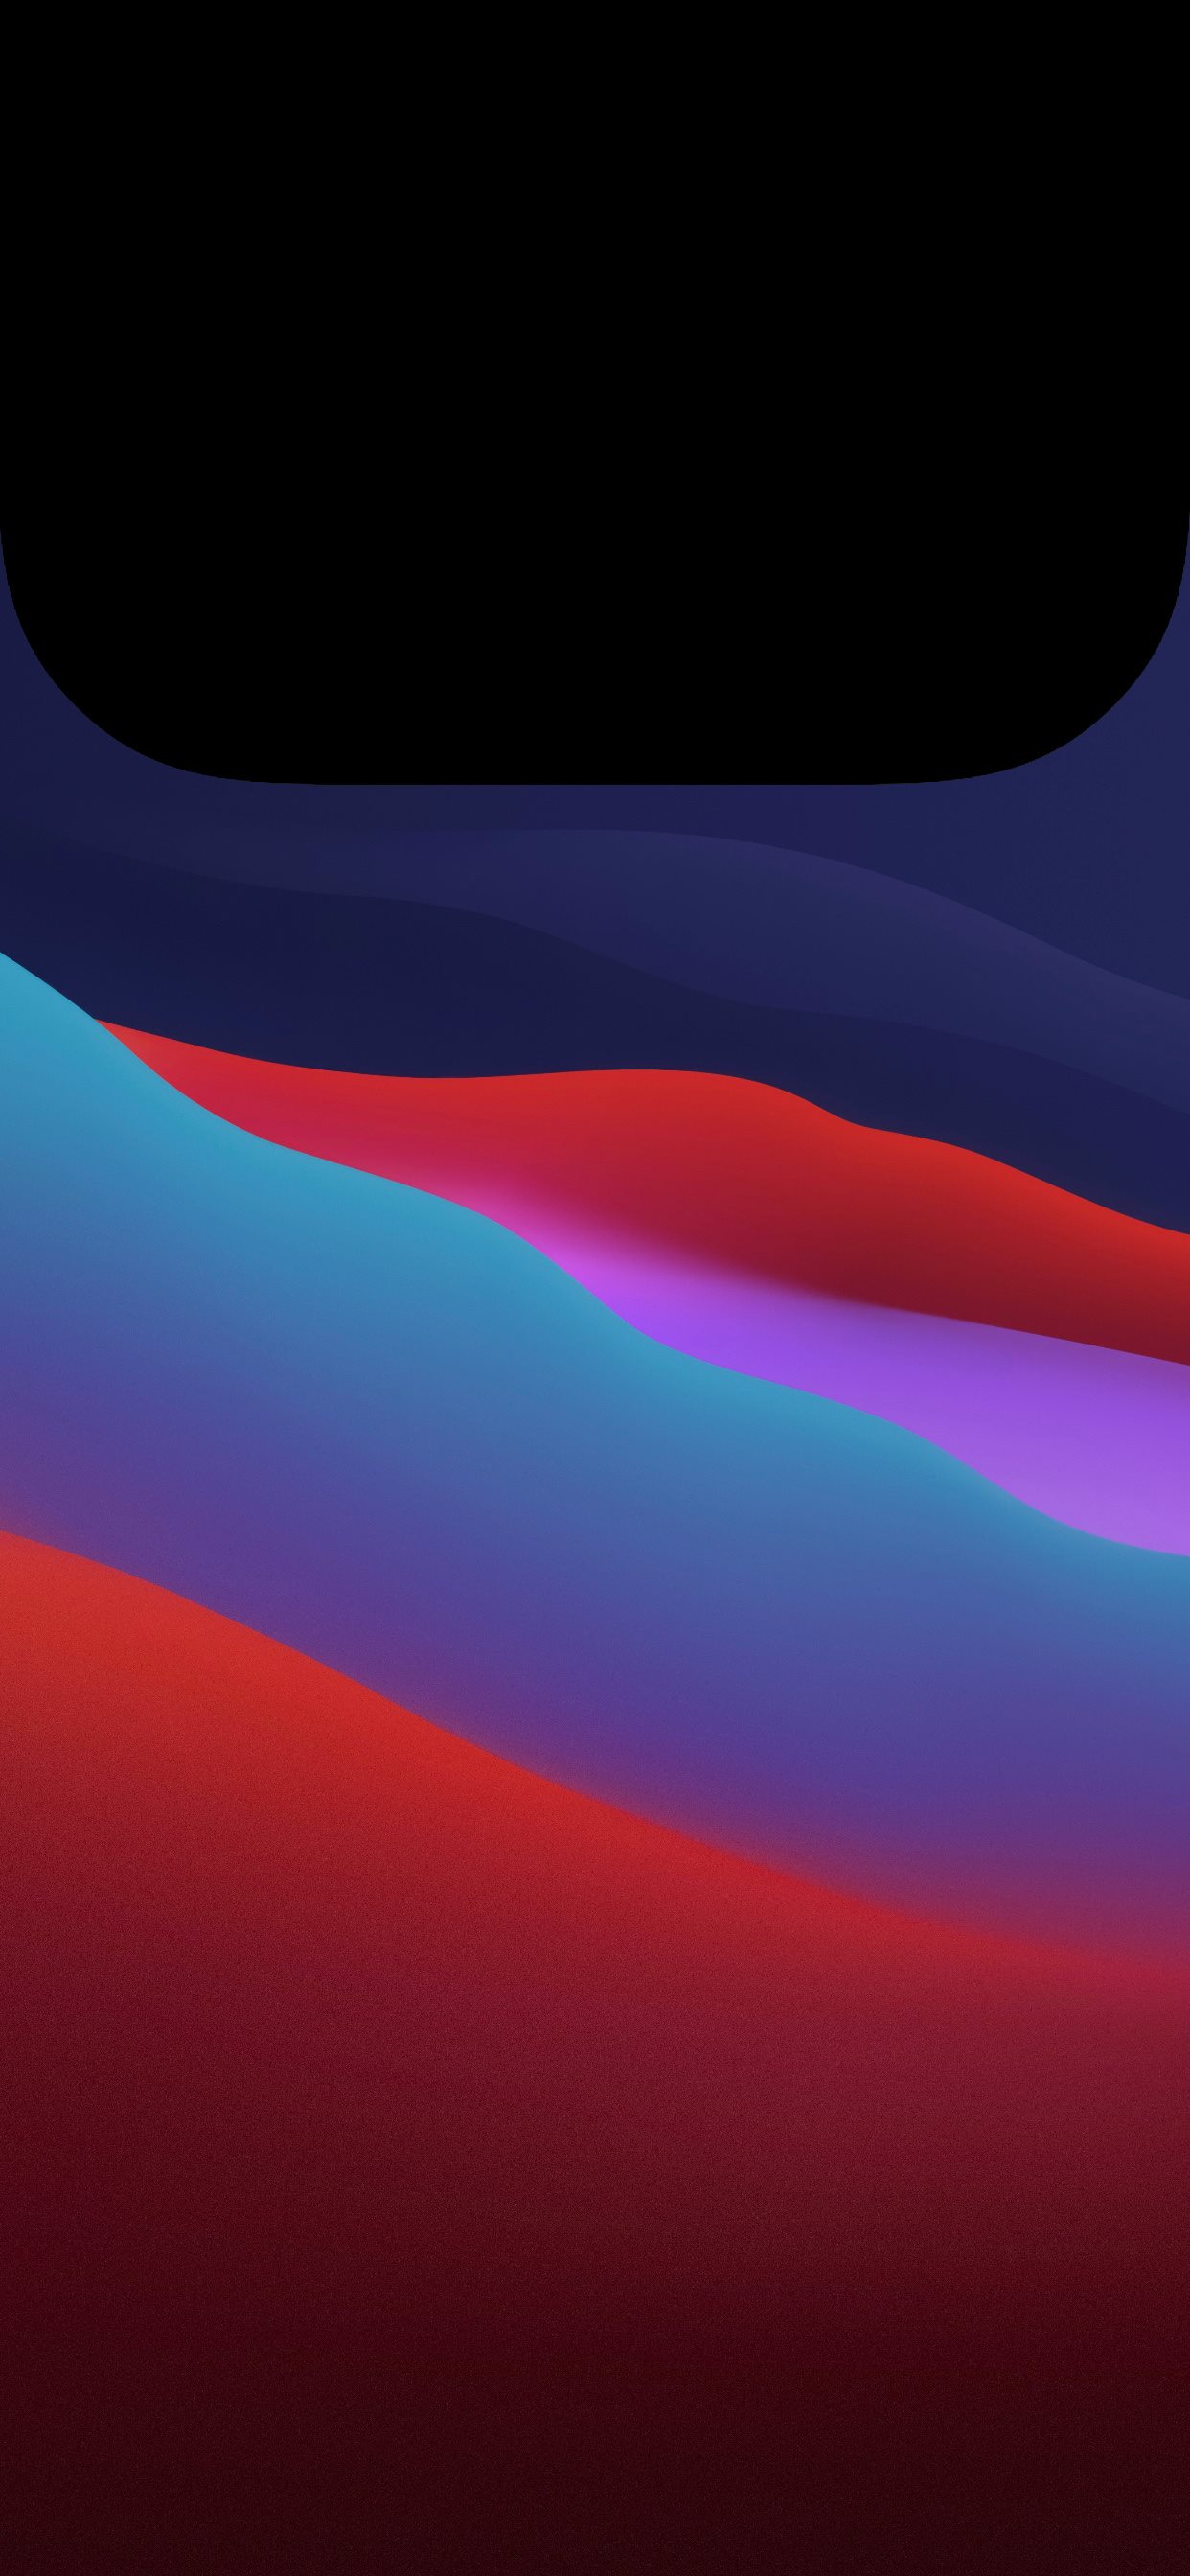 MacOS Big Sur Dark for Widgets Dark by AR7 iPhone X Wallpaper Free Download